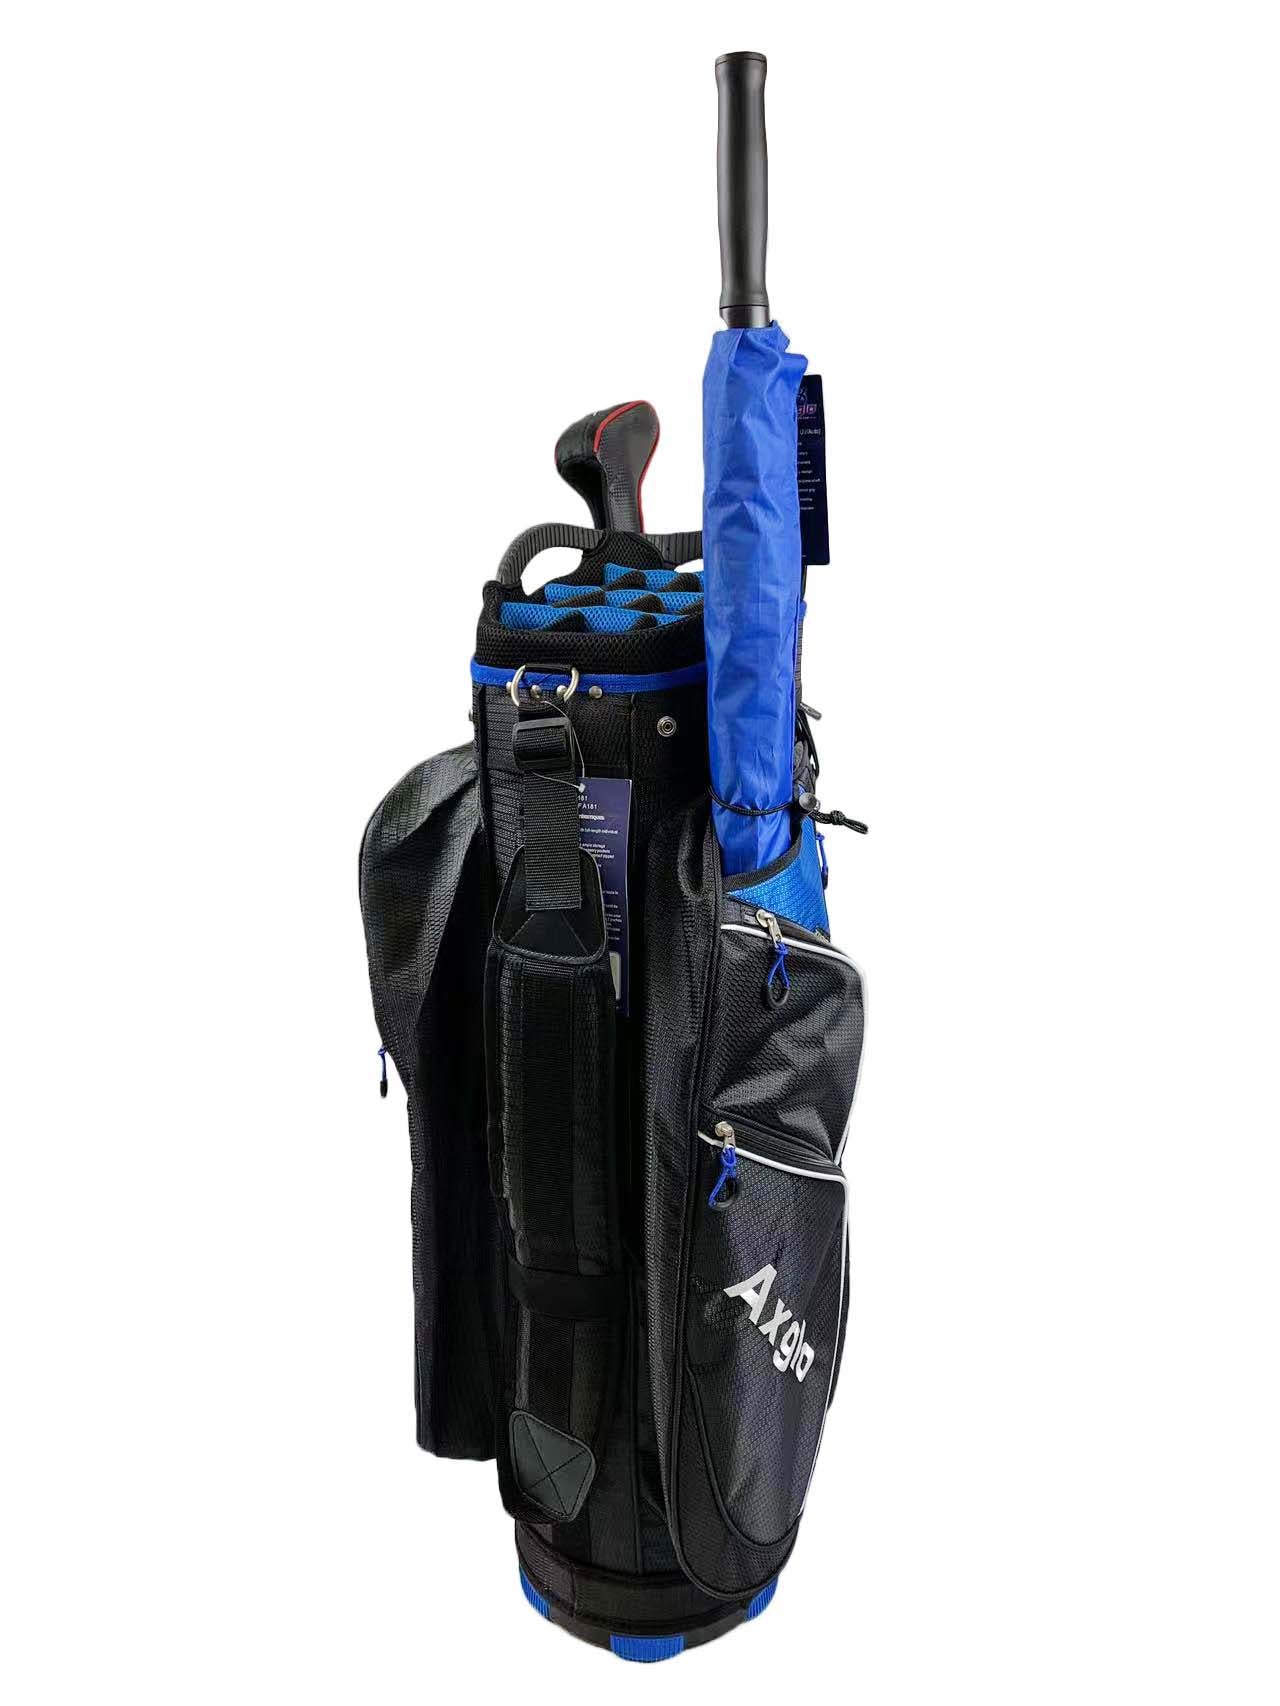 Axglo Golf Cart Bag - Blue/Black